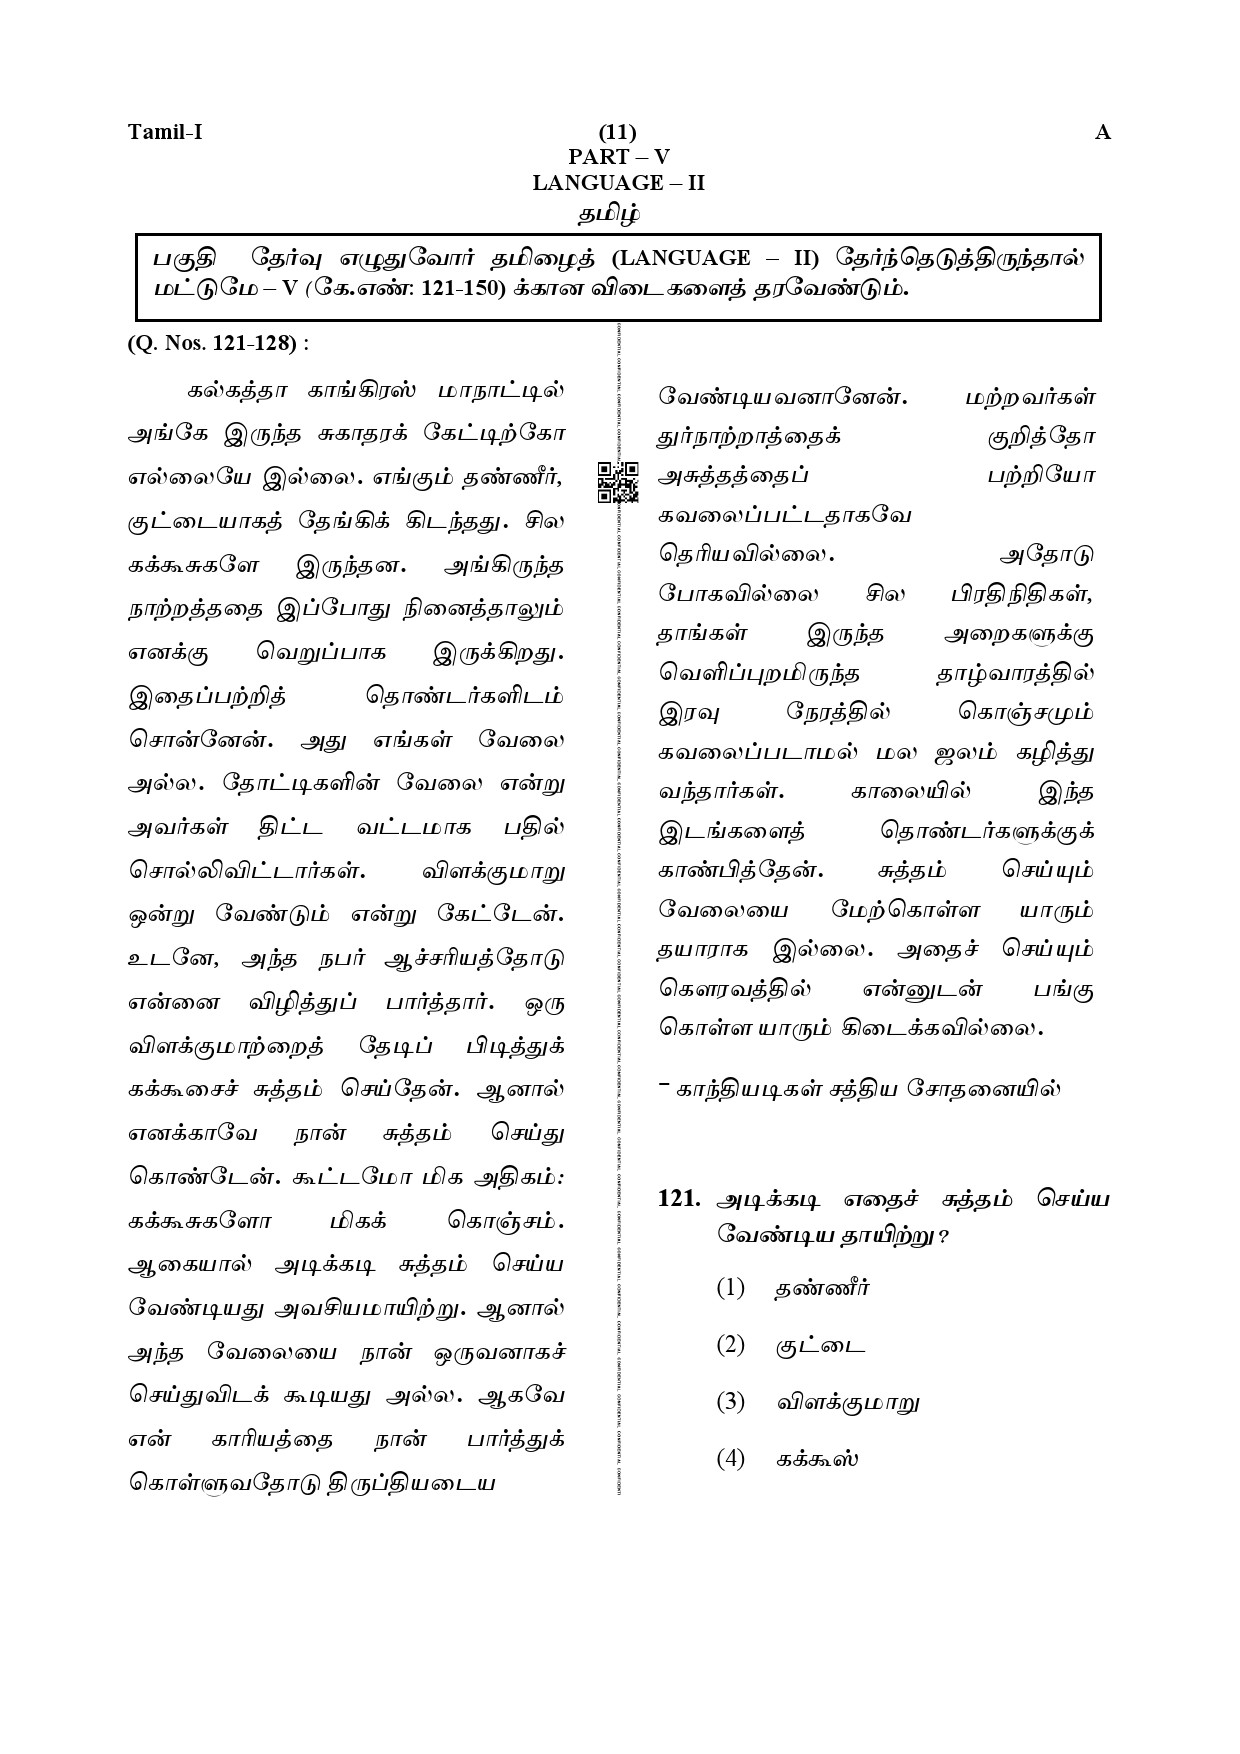 CTET December 2019 Paper 1 Part V Language II Tamil 1